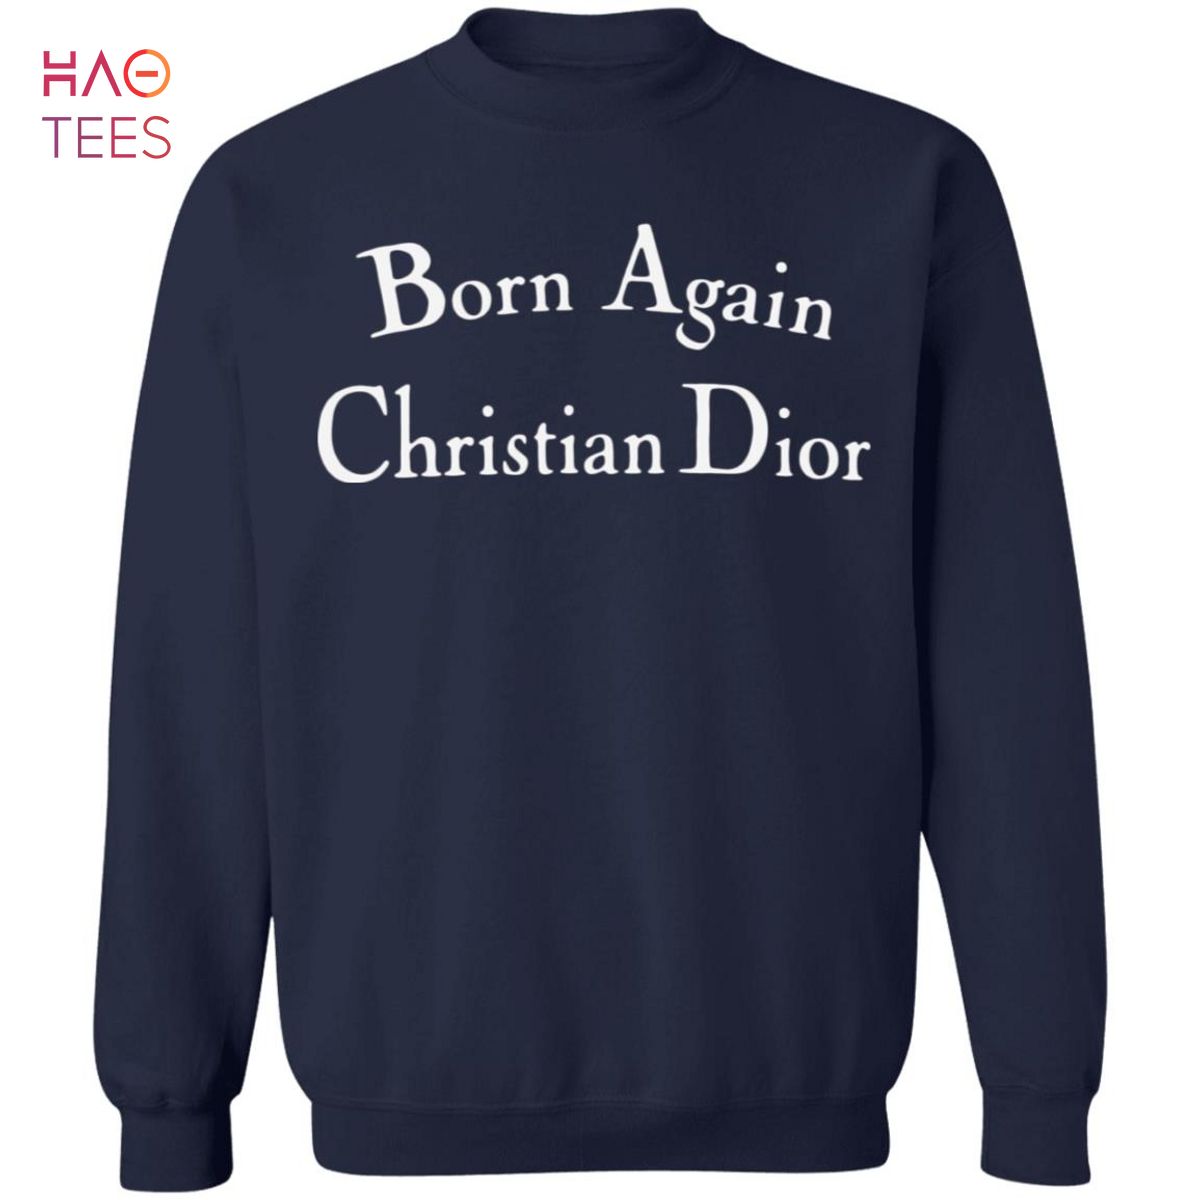 repertoire voorkomen Uitbreiding HOT Born Again Christian Dior Sweater Dark